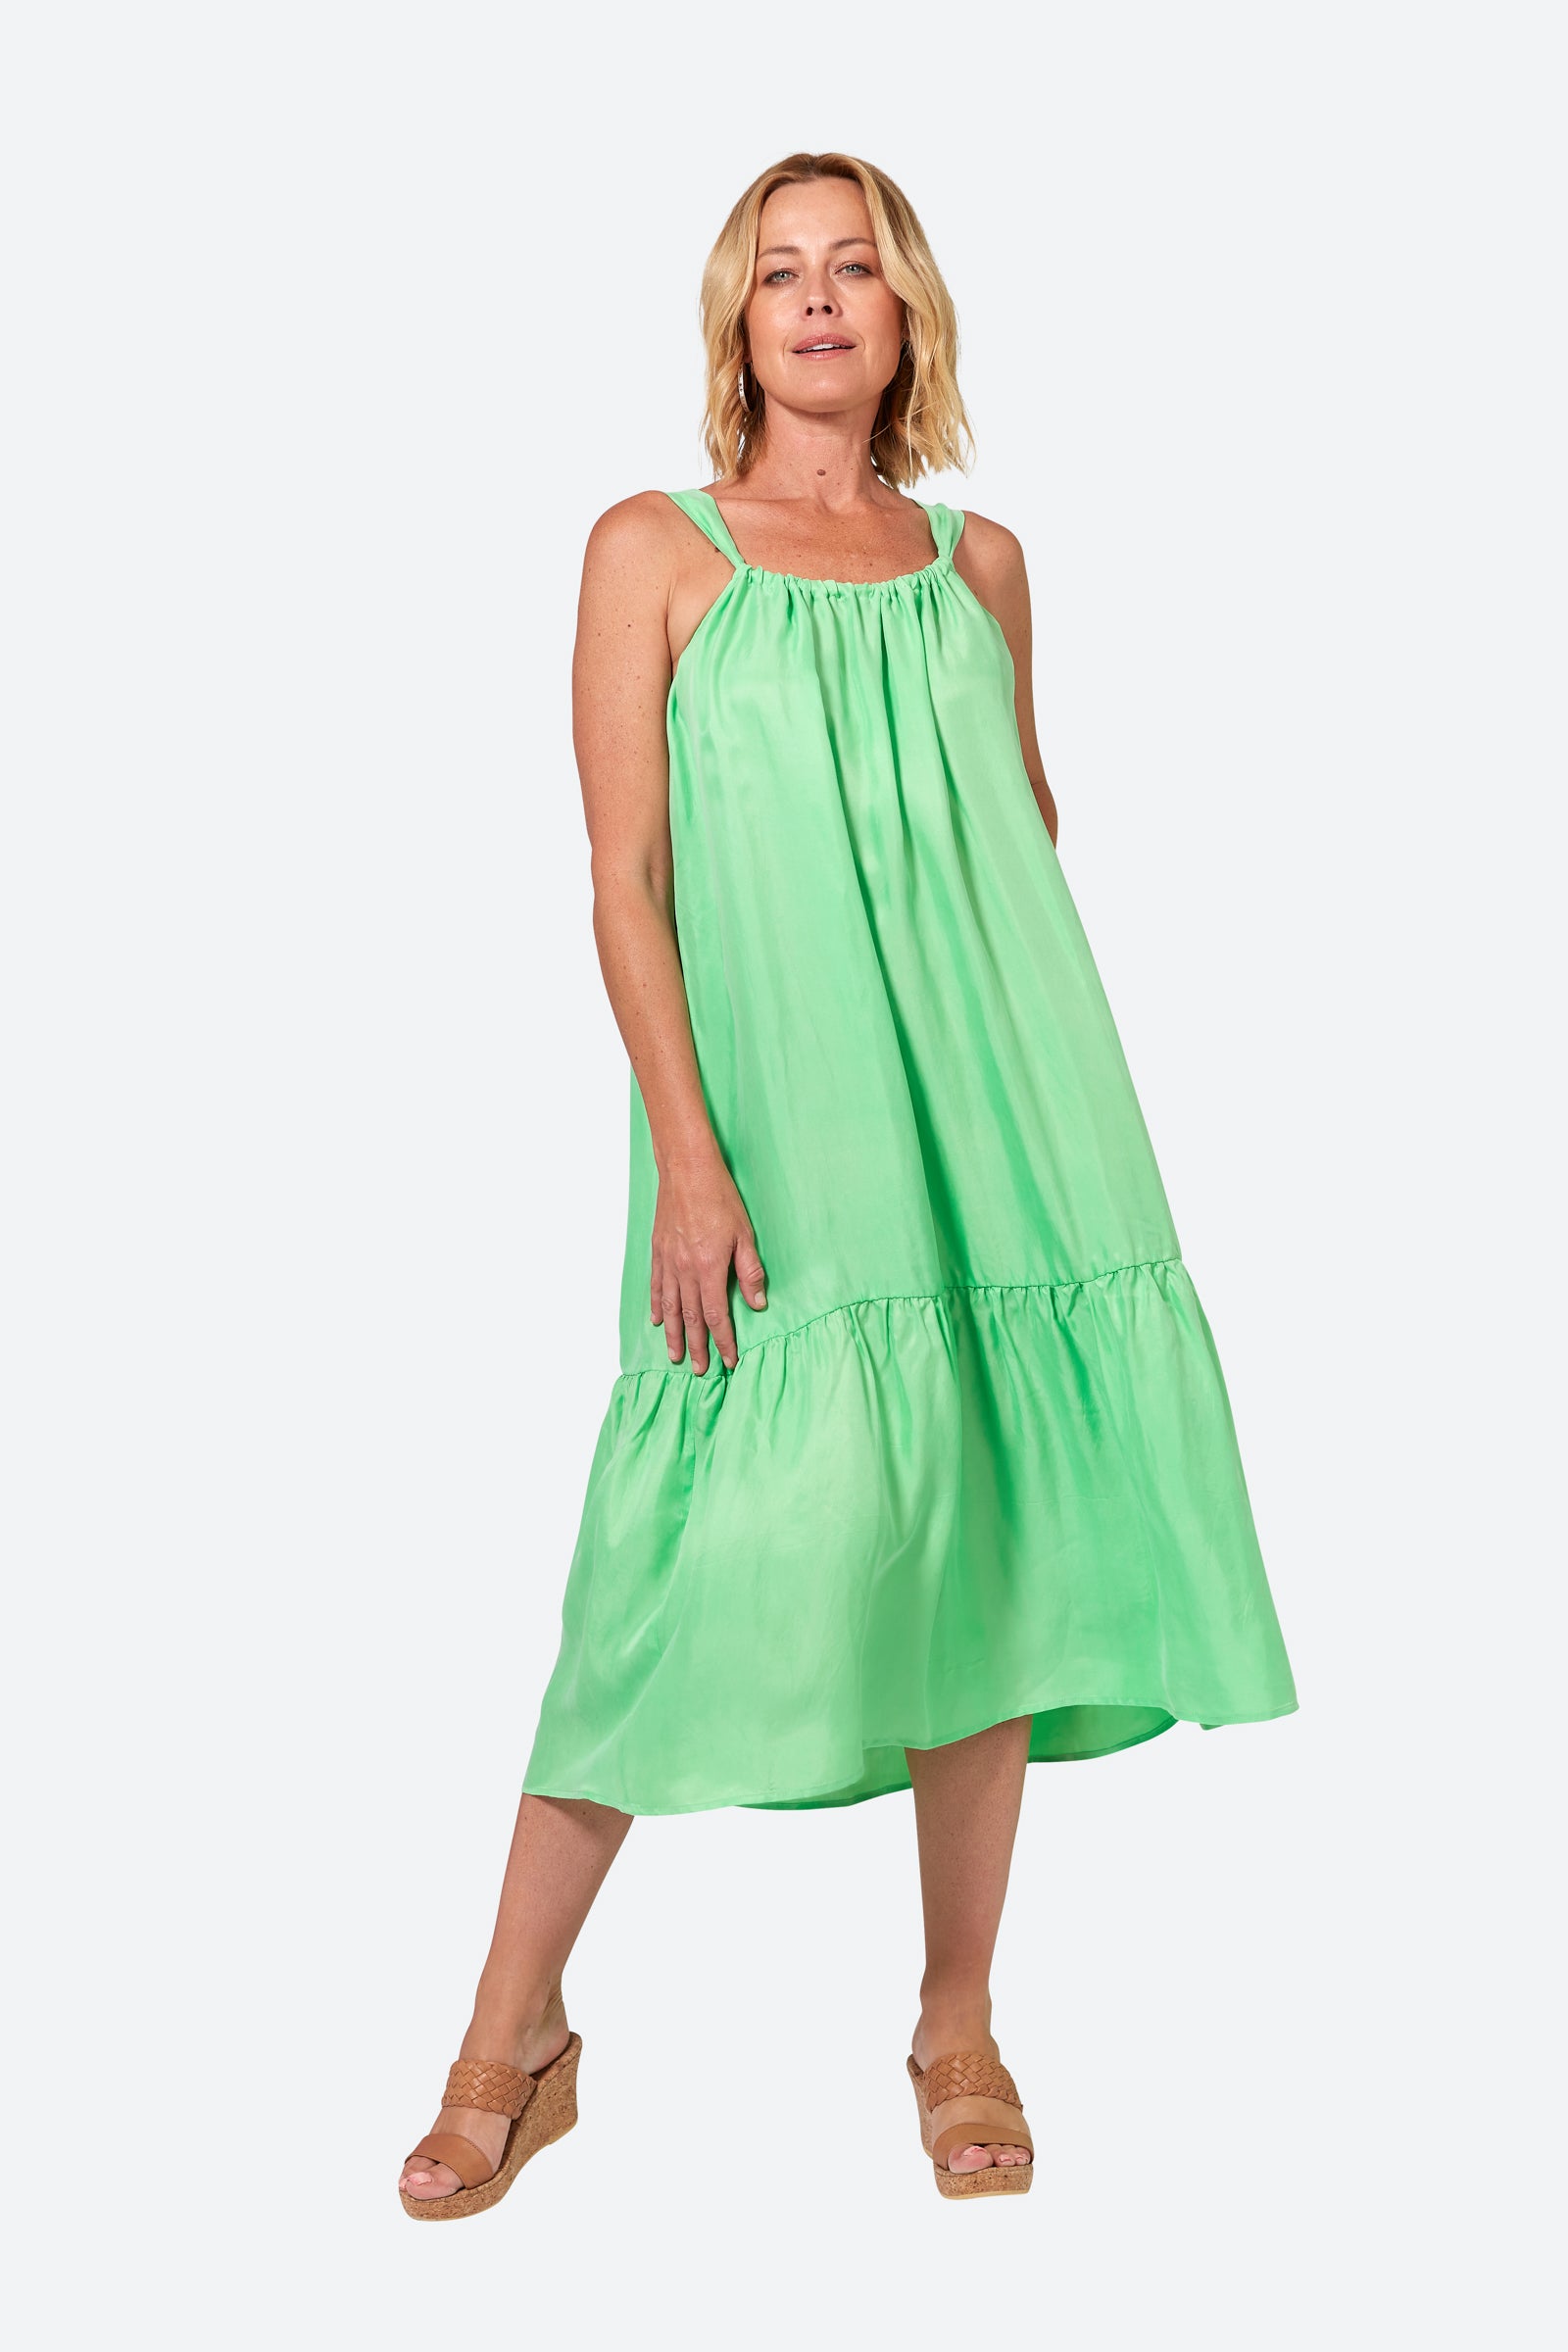 Elixir Tank Dress - Kiwi - eb&ive Clothing - Dress Strappy Mid Cupro